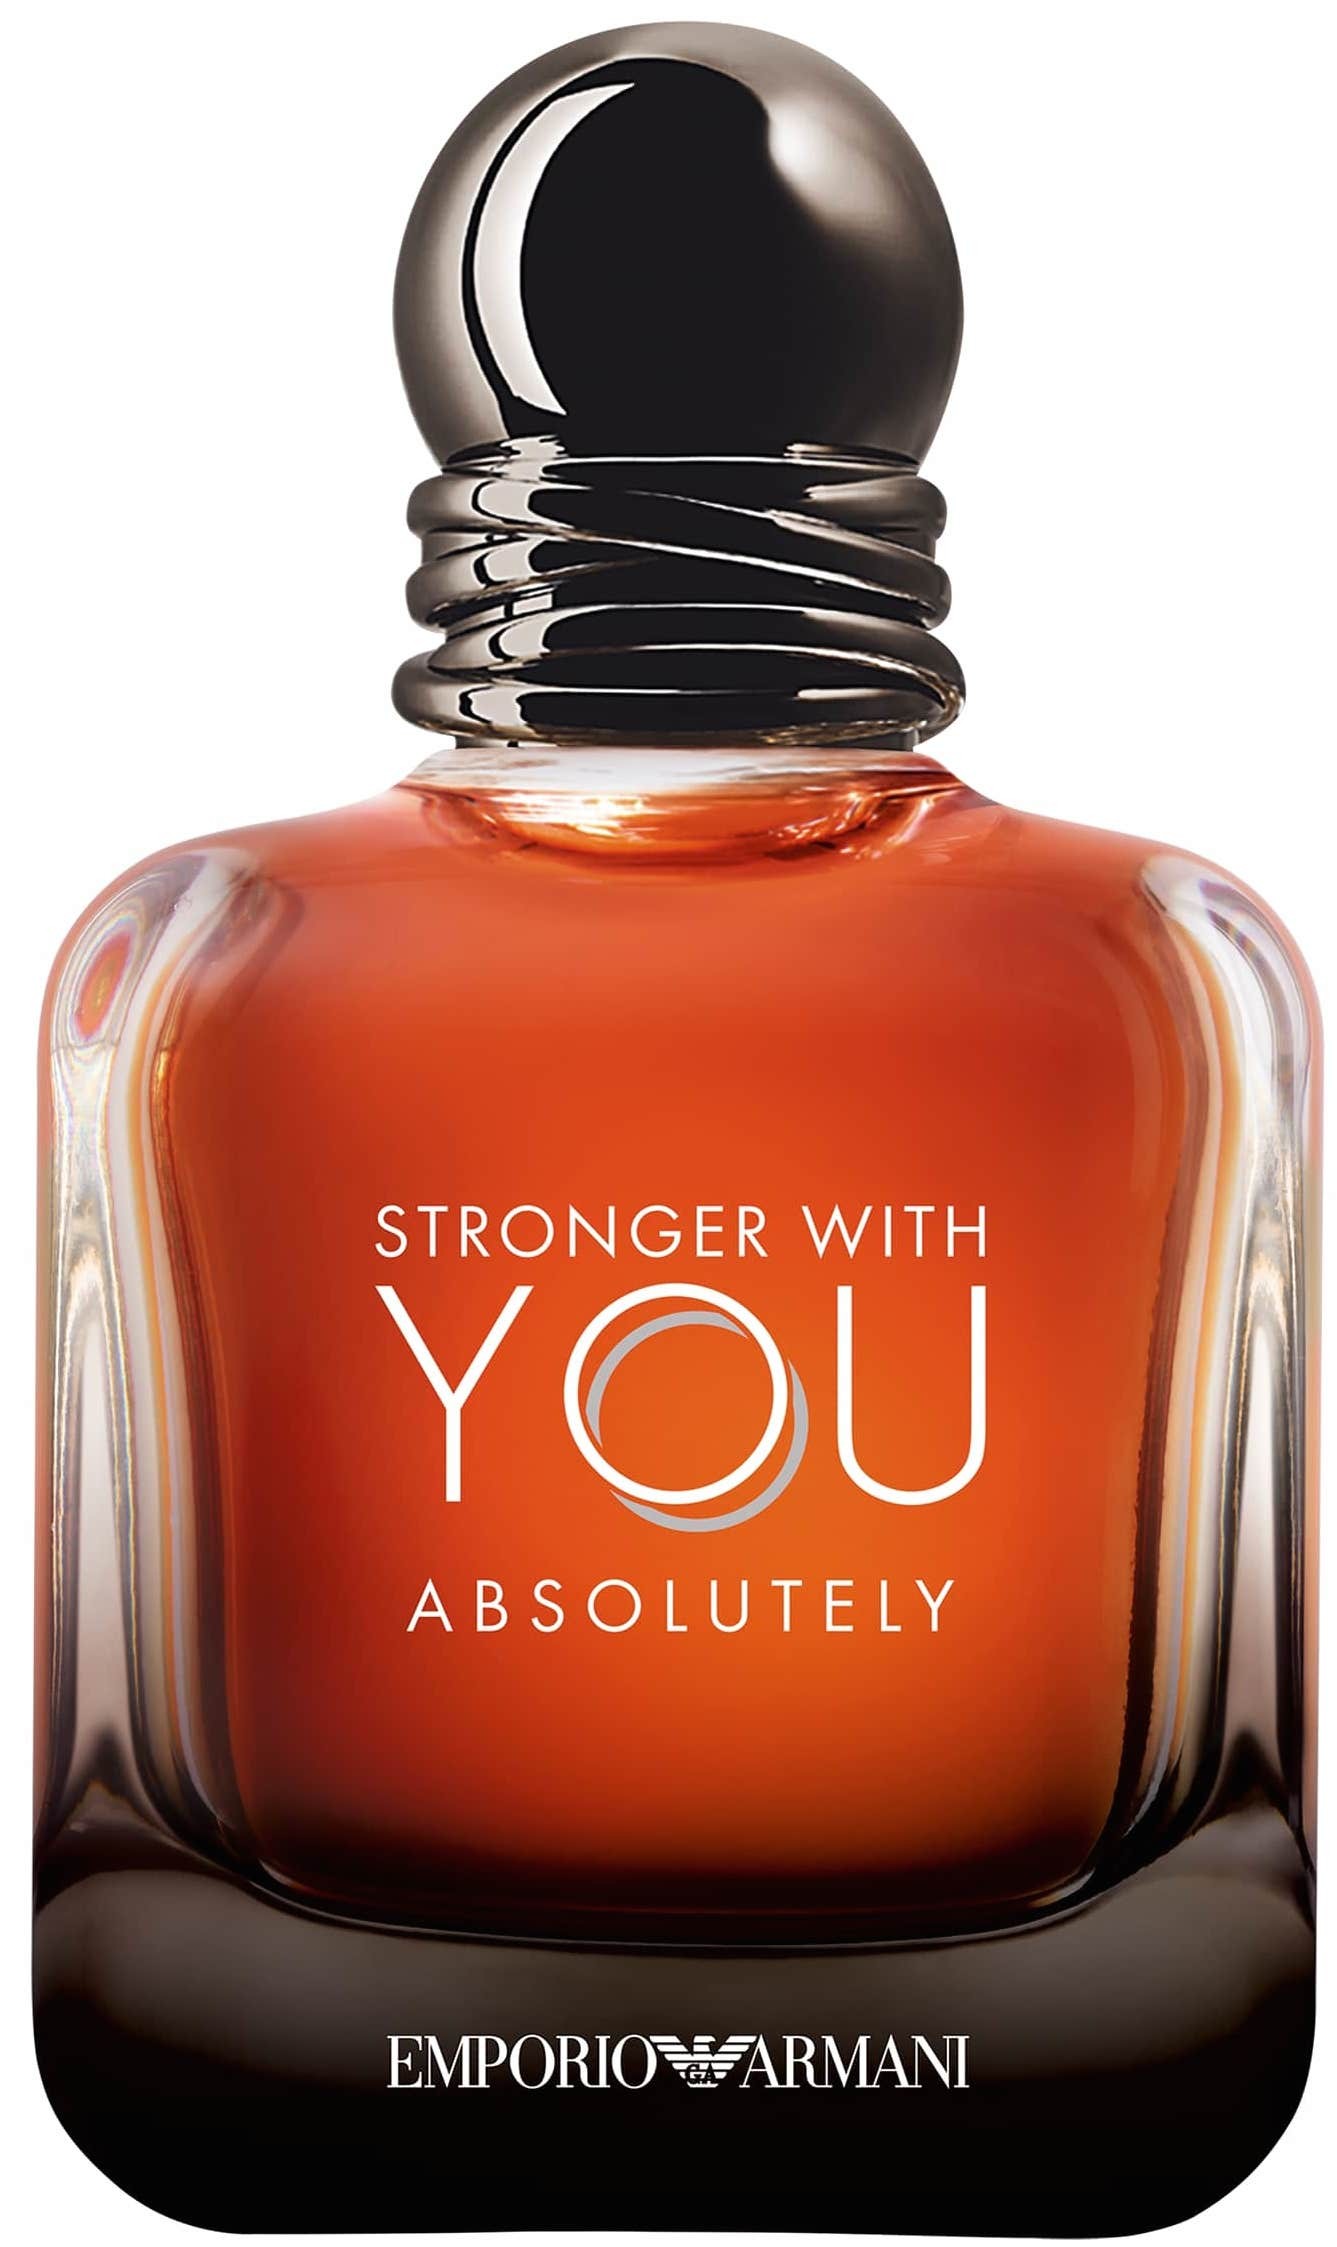 Giorgio Armani Stronger With You Absolutely Eau de parfum spray 100 ml